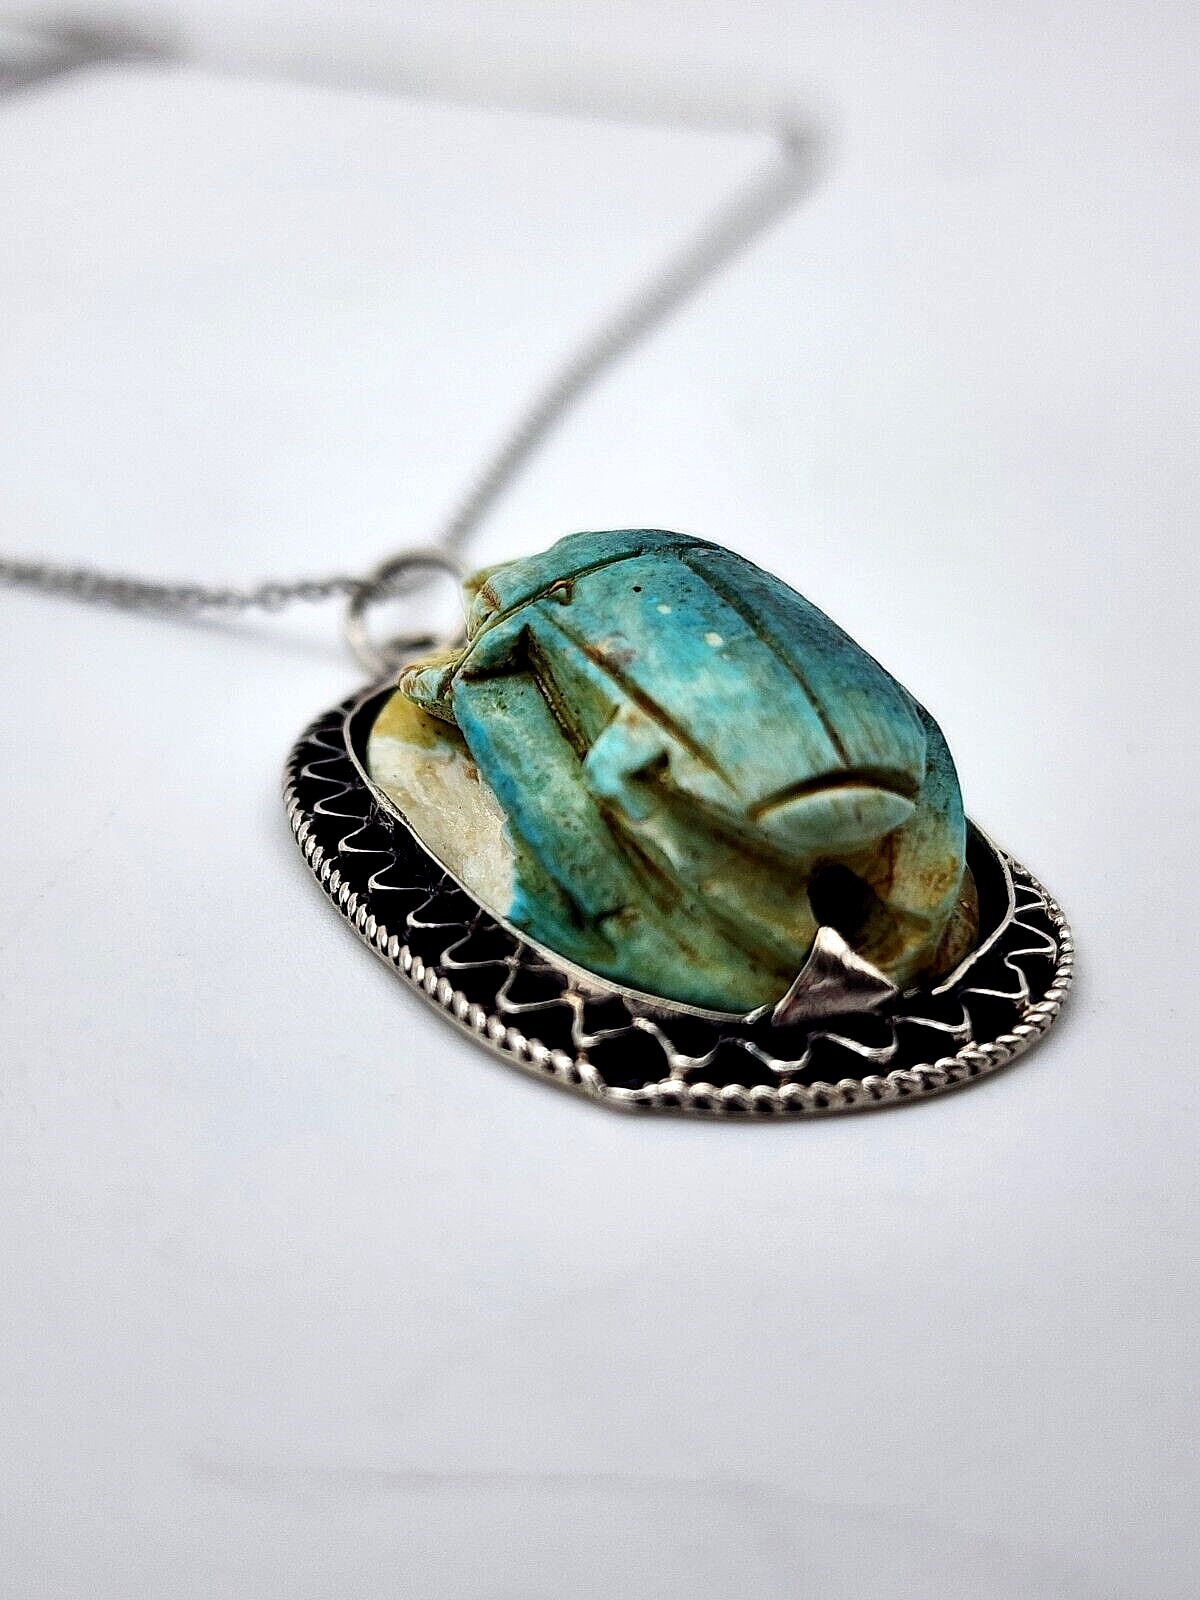 Unique Ancient Egyptian Scarab Necklace Rare Handmade Beetle Pendant Amulet